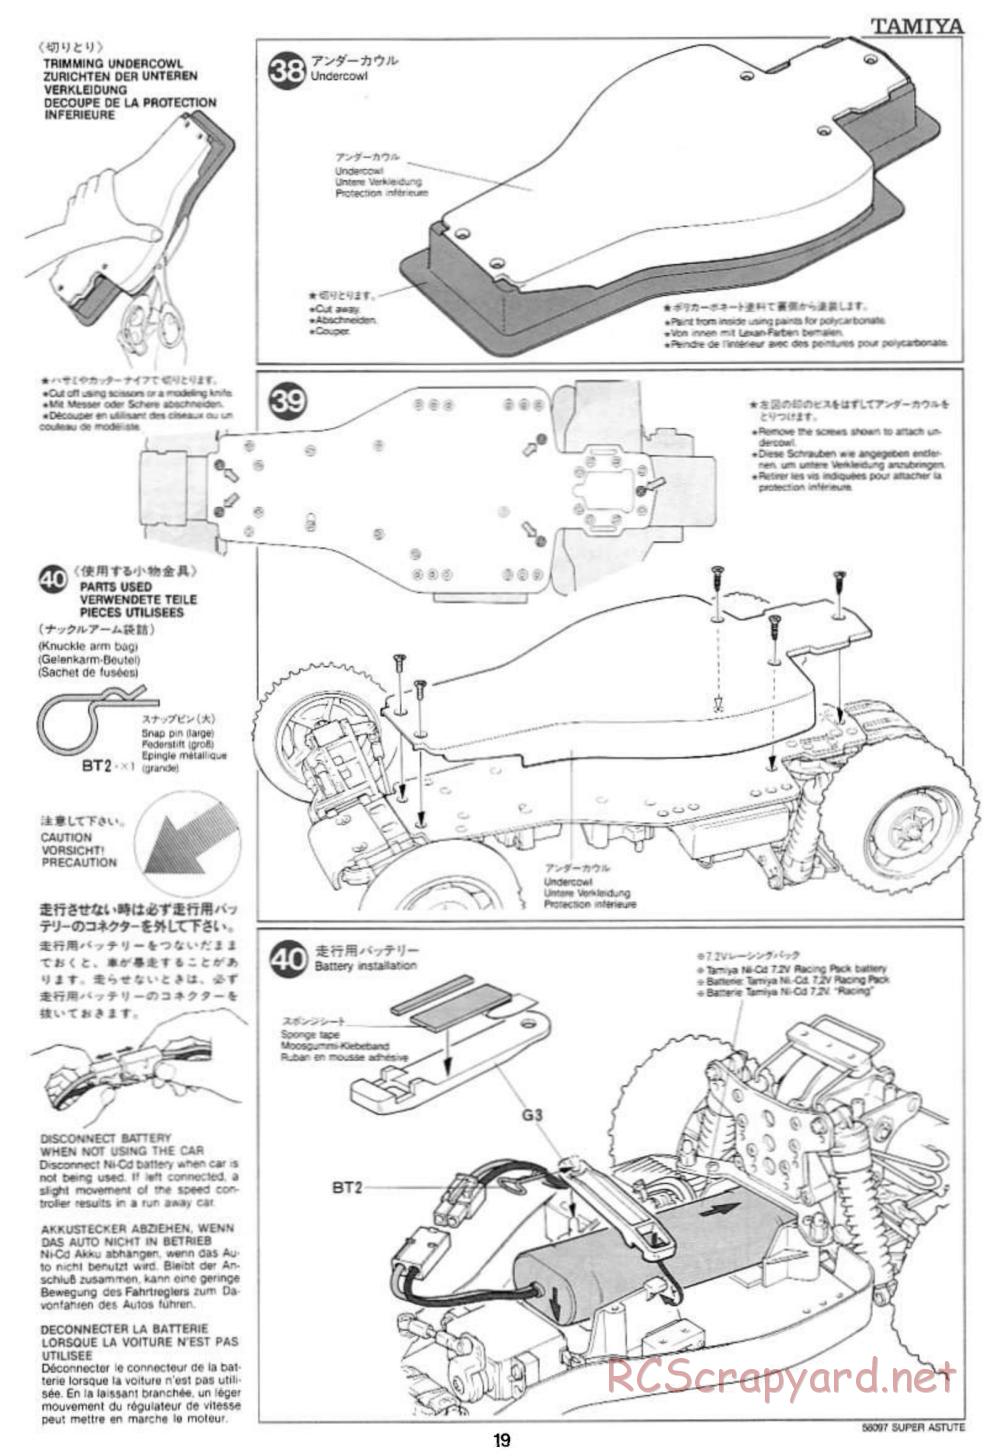 Tamiya - Super Astute - 58097 - Manual - Page 19